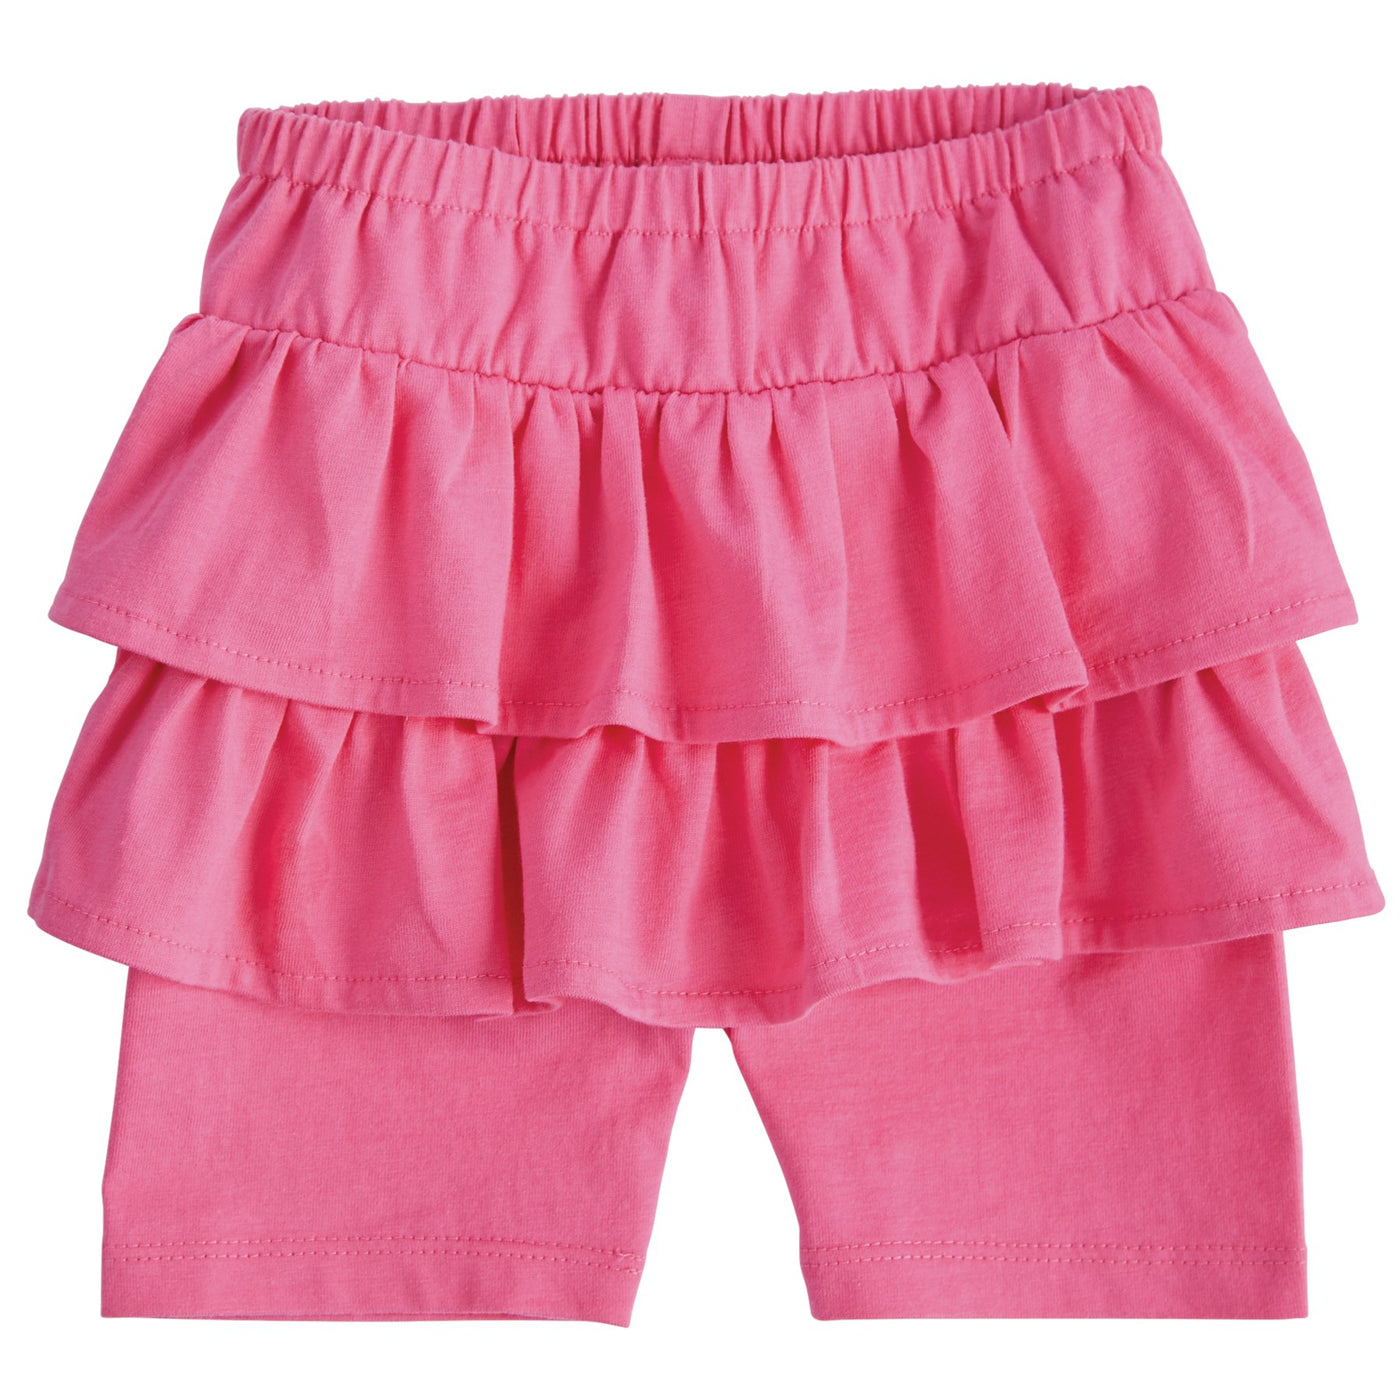 Pink Ruffle Skirted Shorts